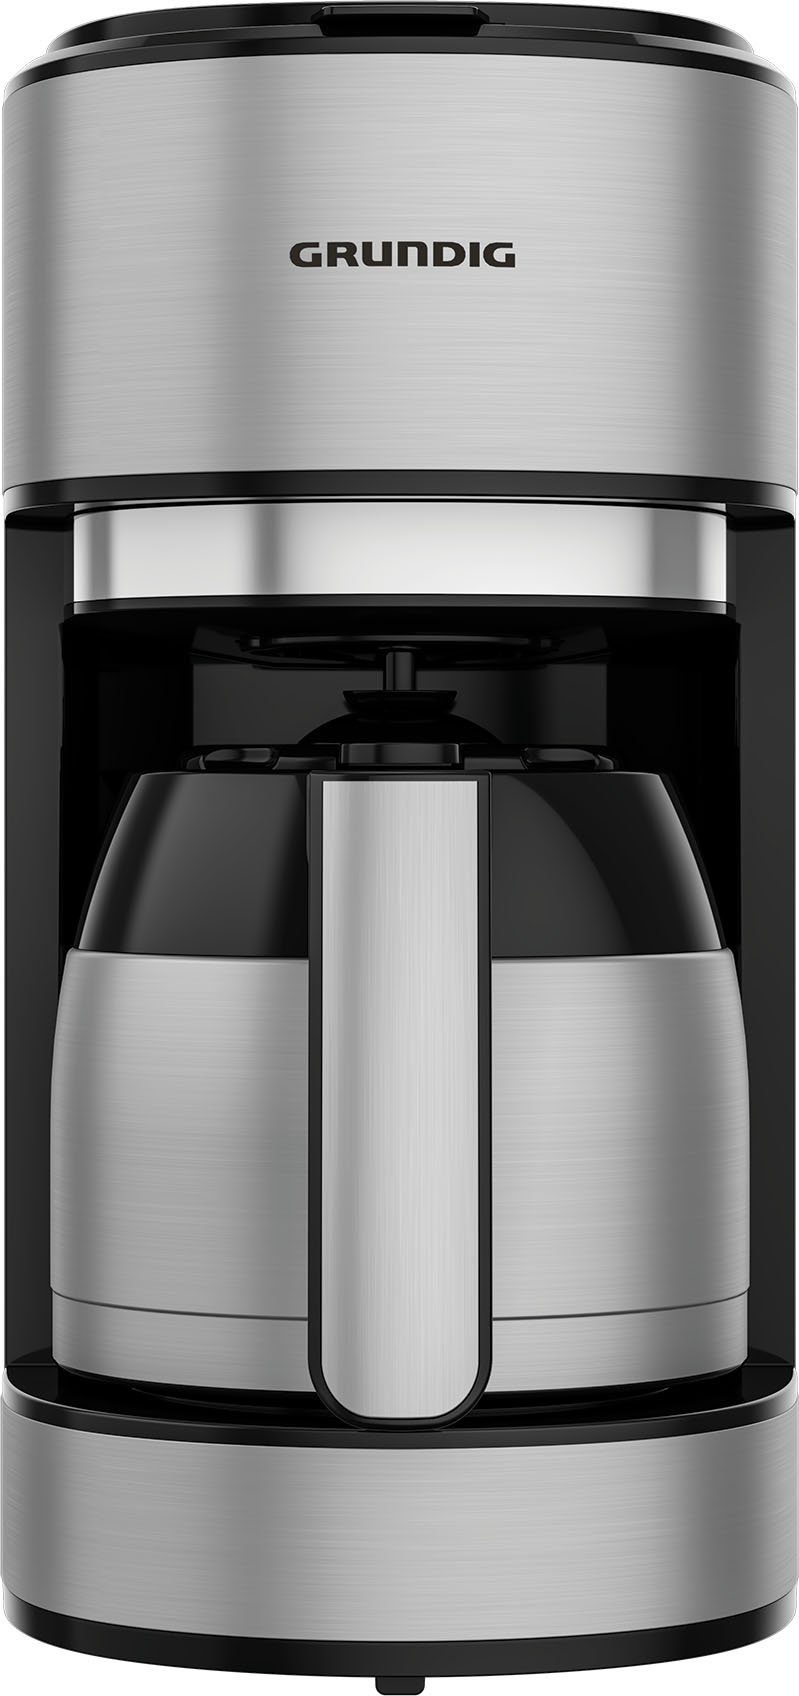 Grundig Filterkaffeemaschine 1l KM T, 5620 Kaffeekanne